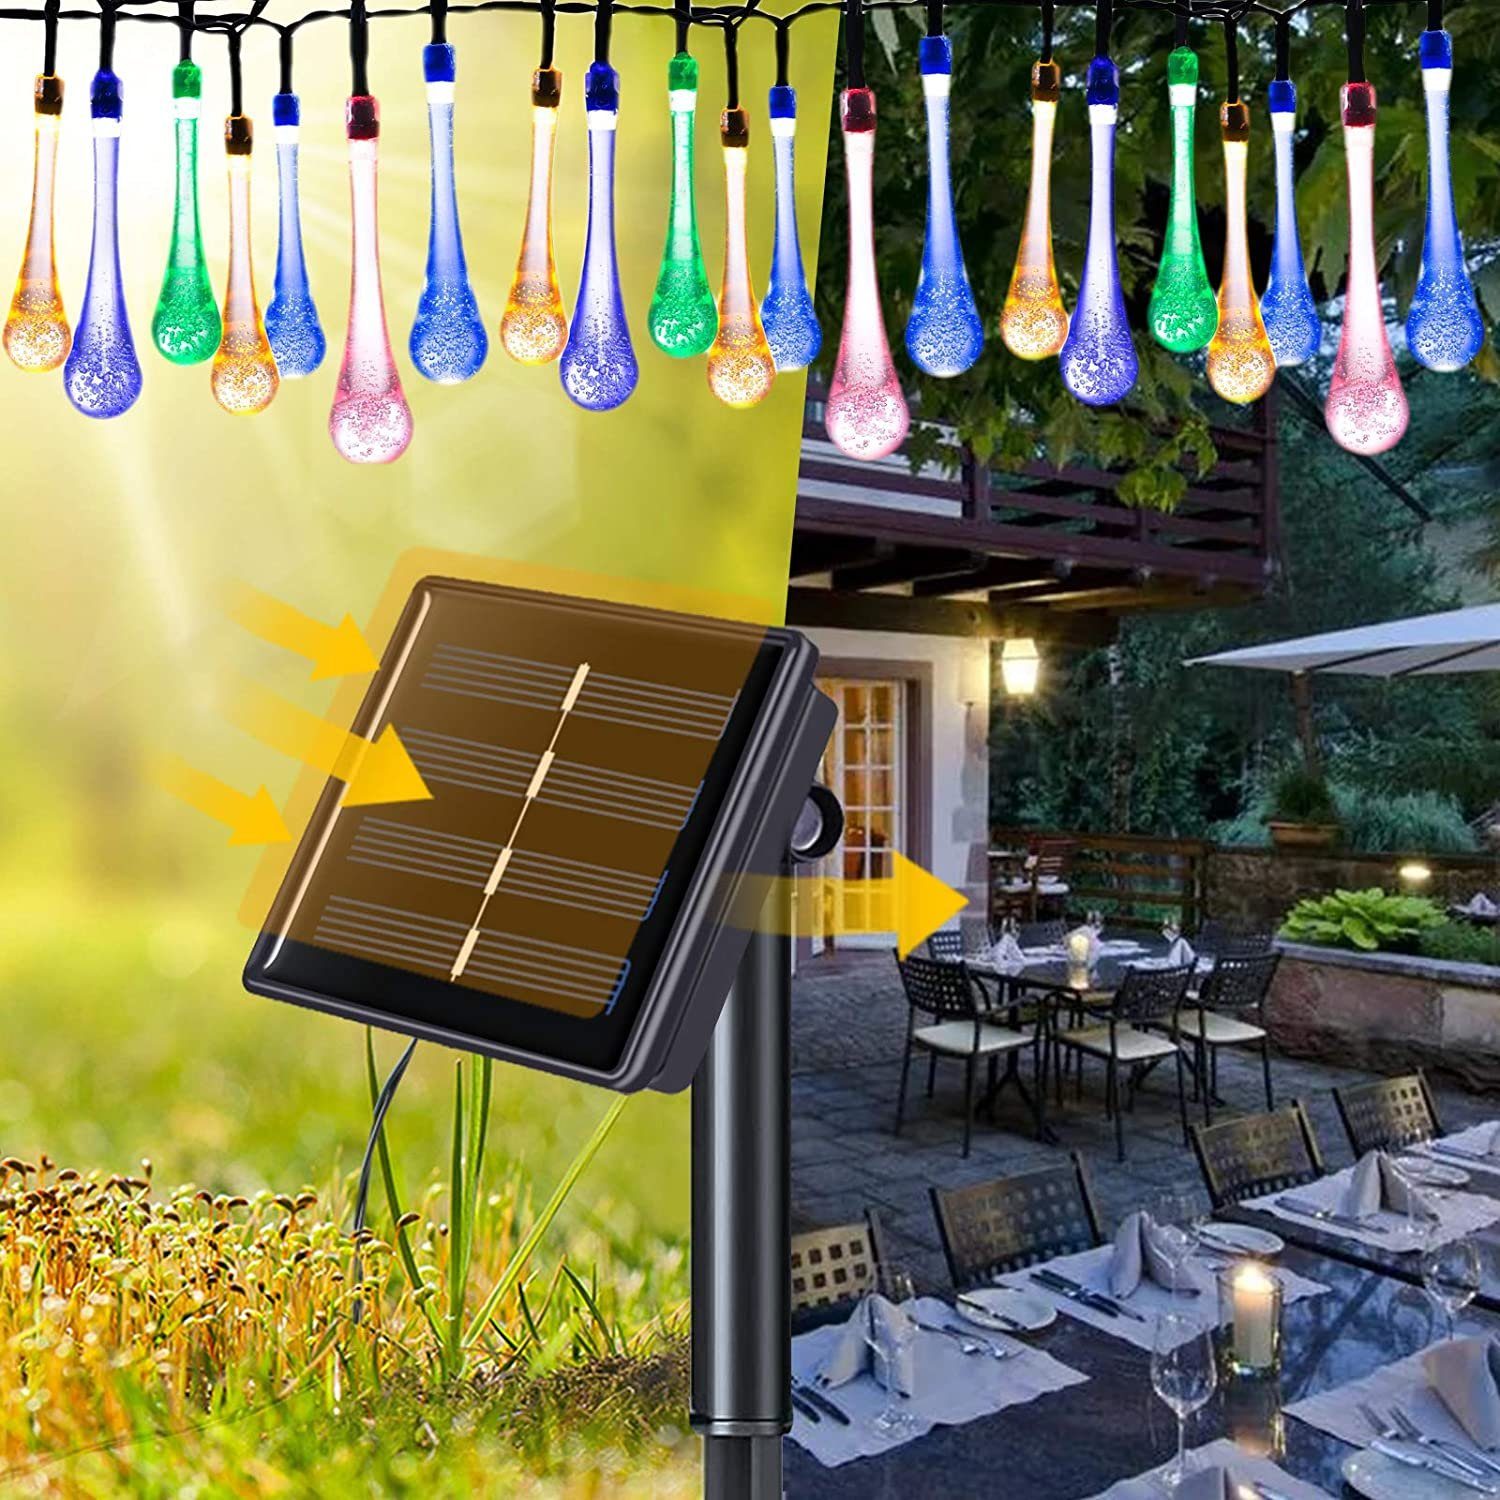 Modes 8 5m Lights, Outdoor Lights, Teardrop String Oneid 20 Solar LED LED-Lichterkette